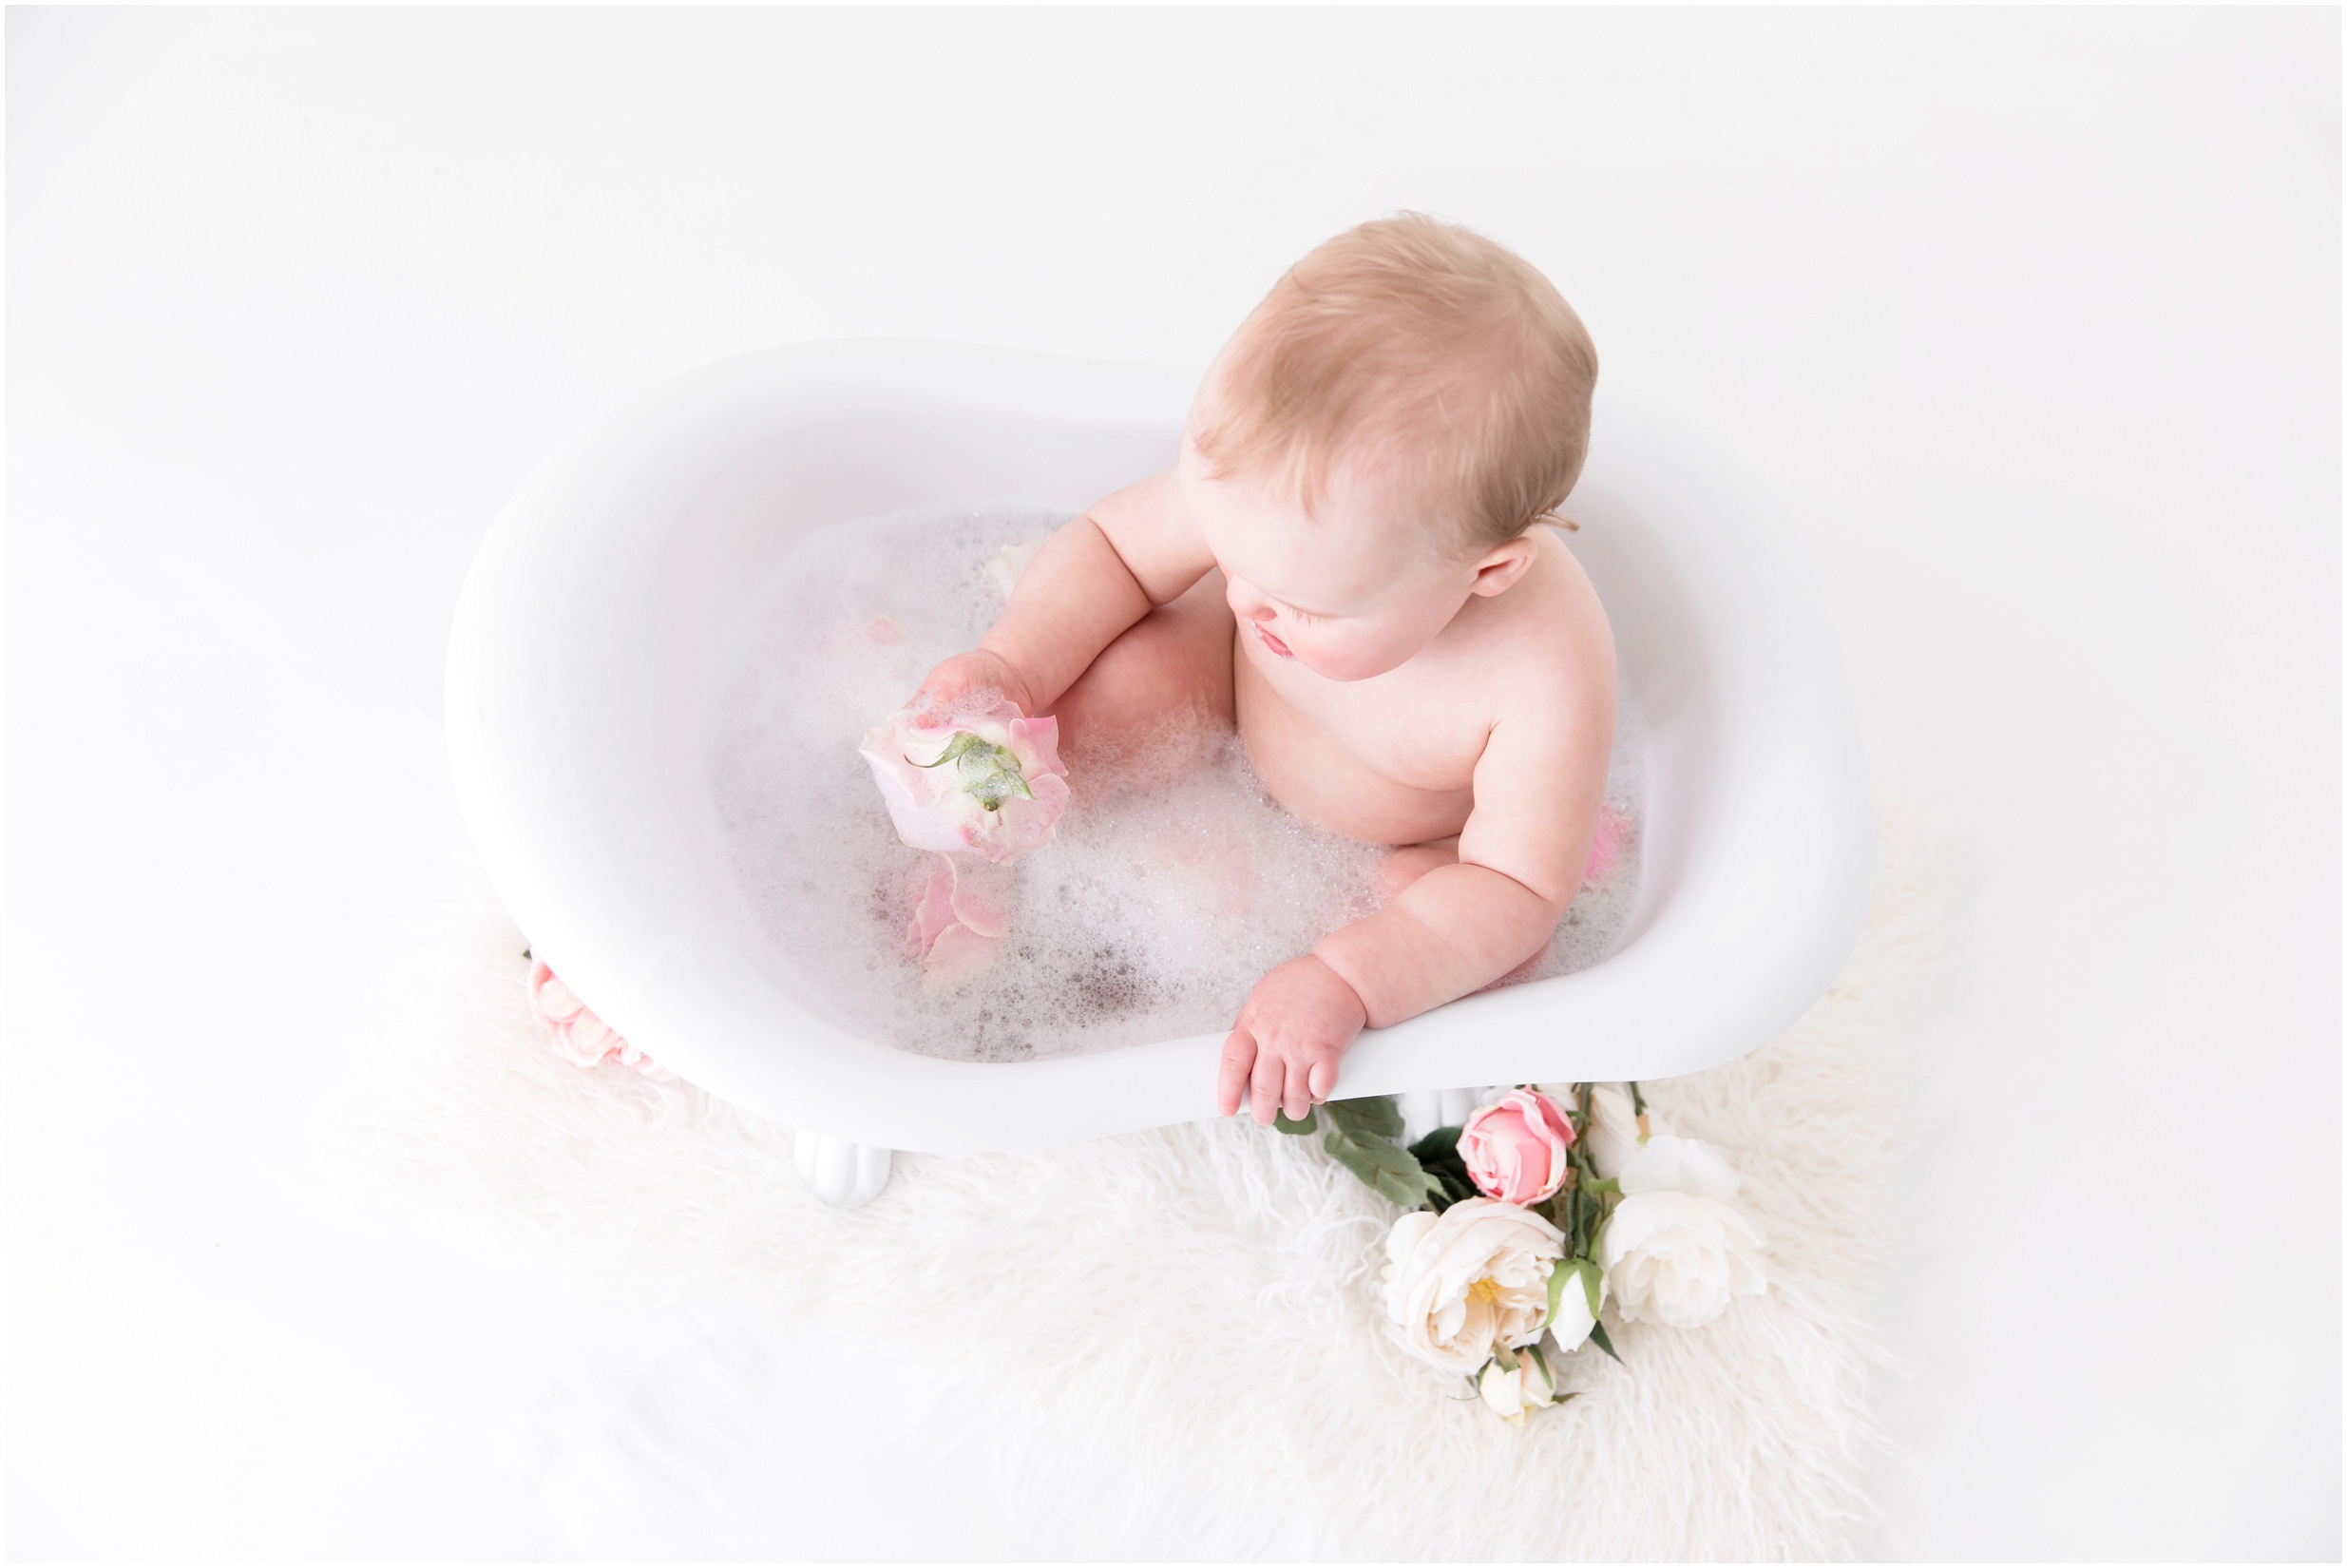 bubble bath photos, cake smash, edmonton family photographer, nc photography, first birthday photos, milk bath photos